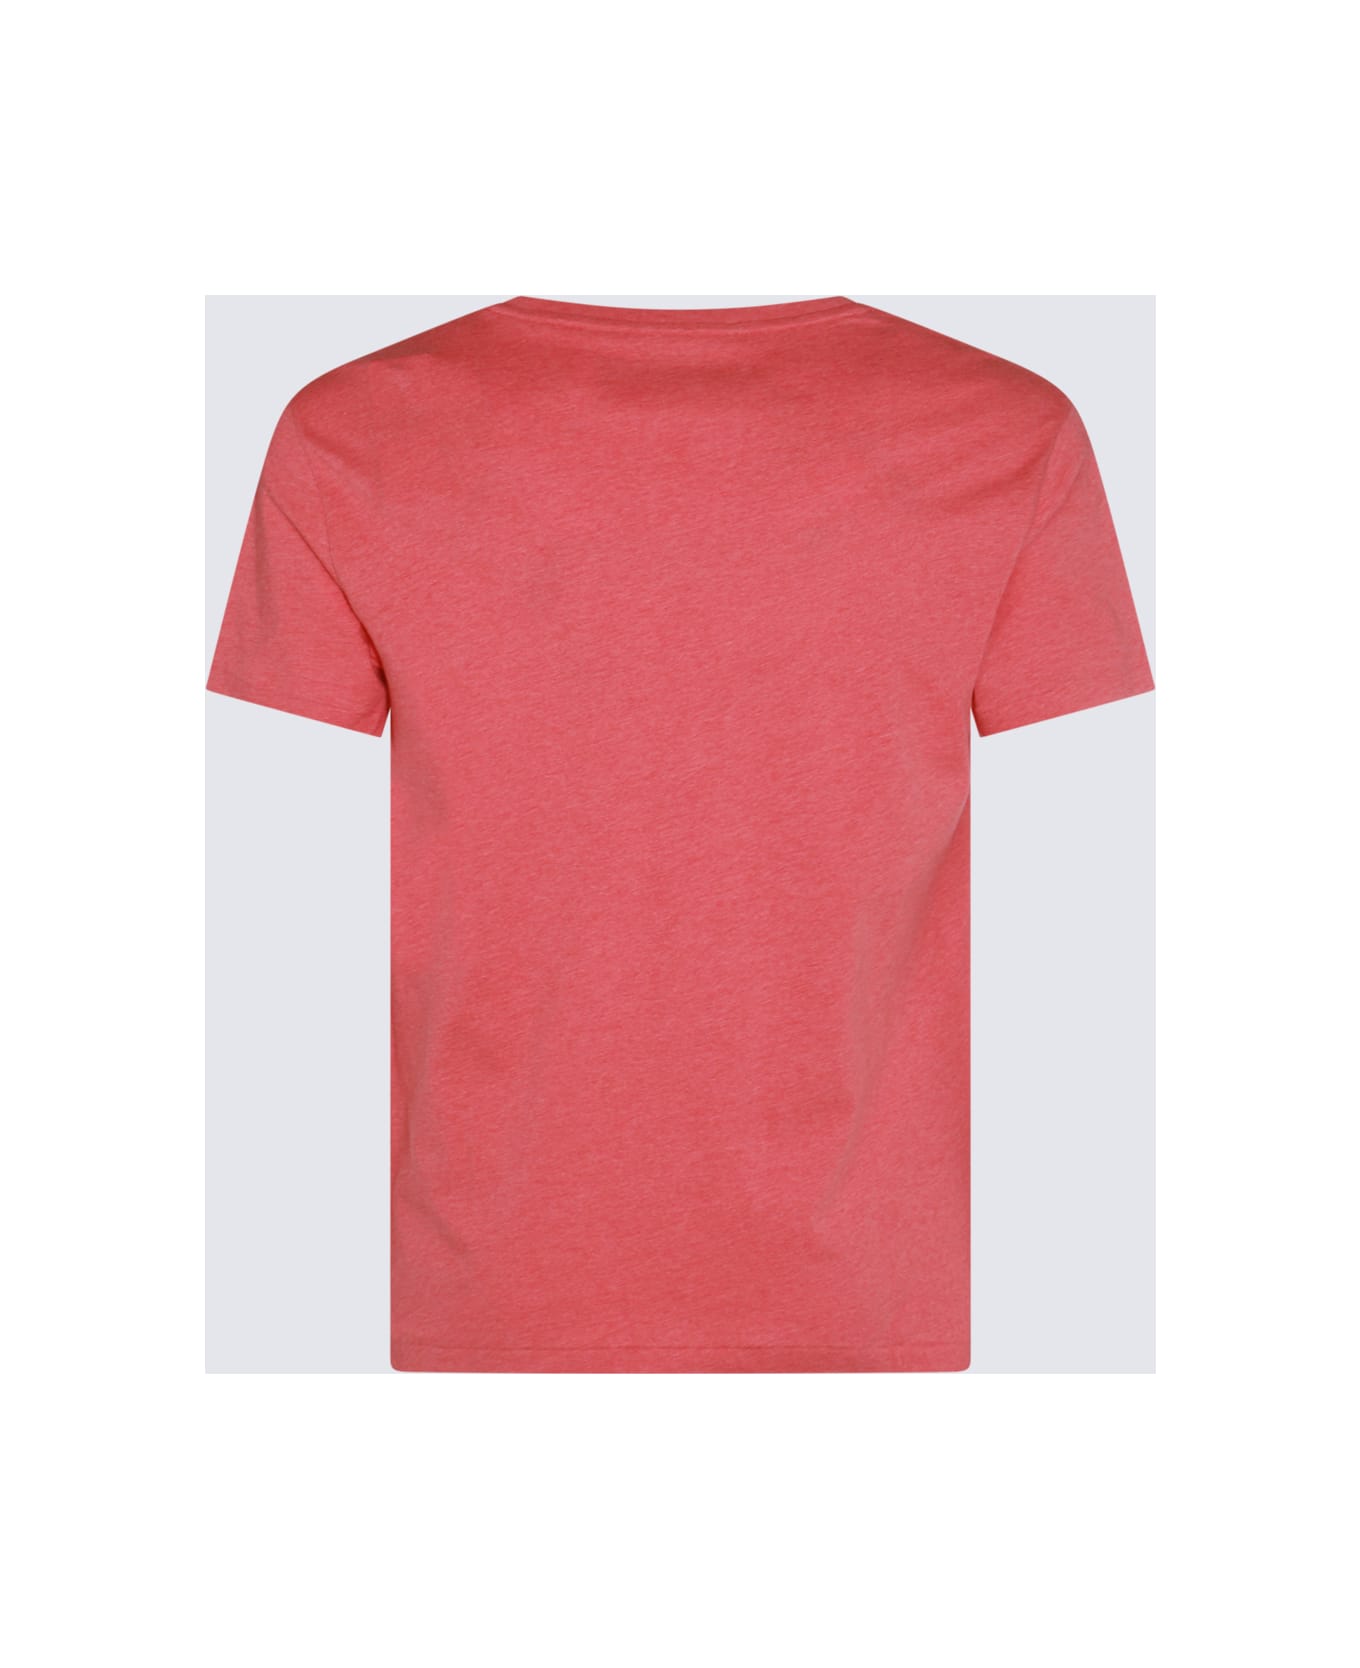 Polo Ralph Lauren Red Cotton T-shirt - HIGHLAND ROSE HEATHER